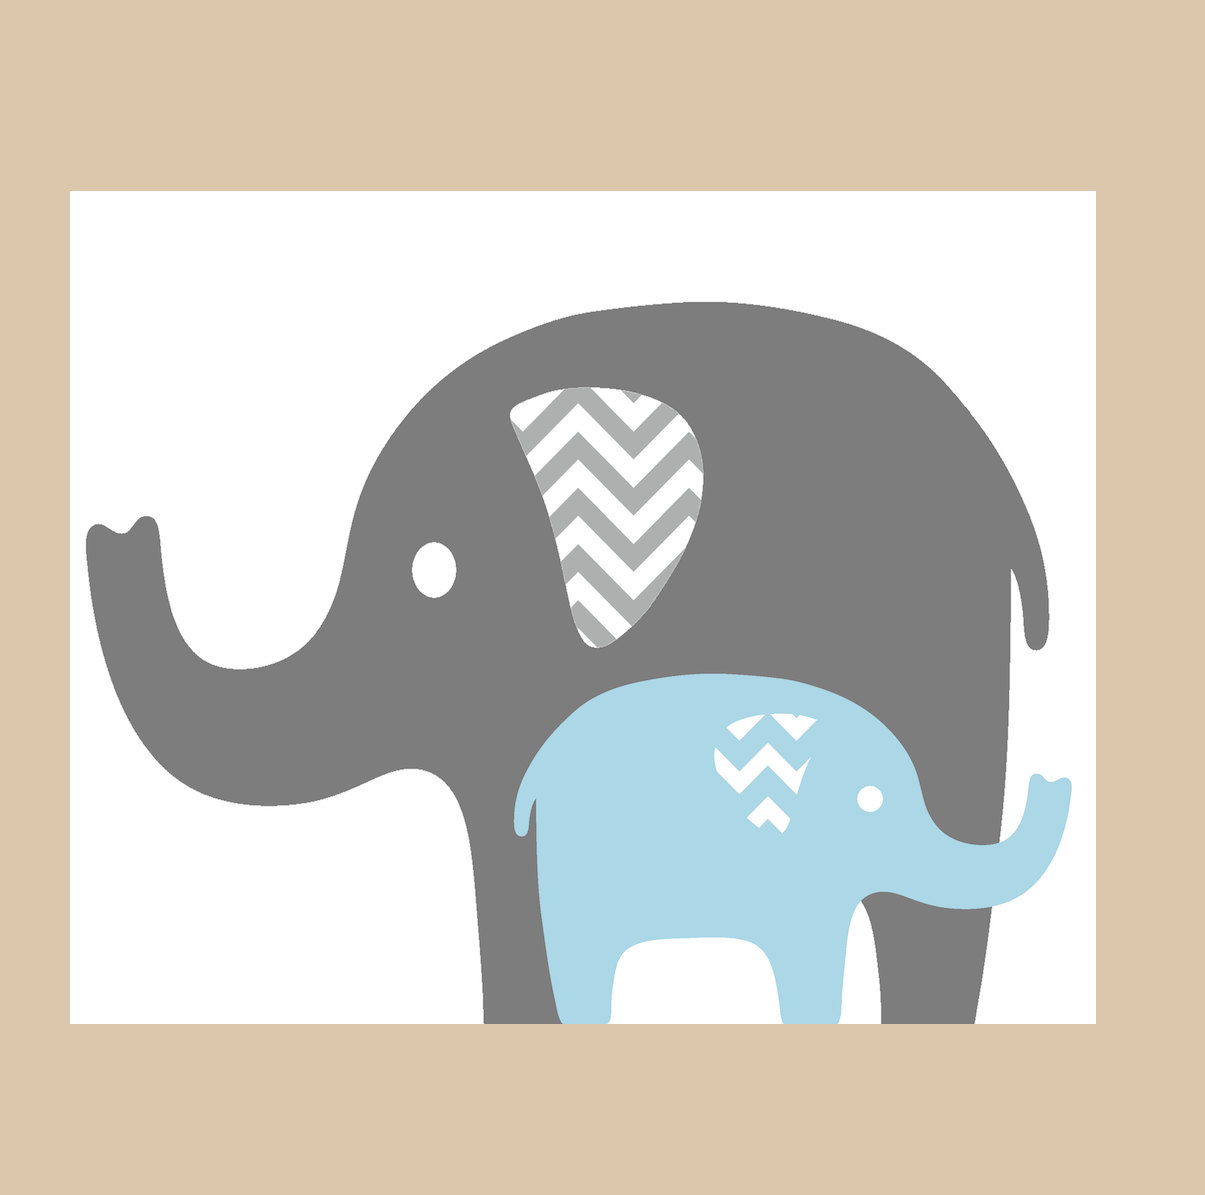 Free Baby Elephant Clip Art Pictures - Clipartix